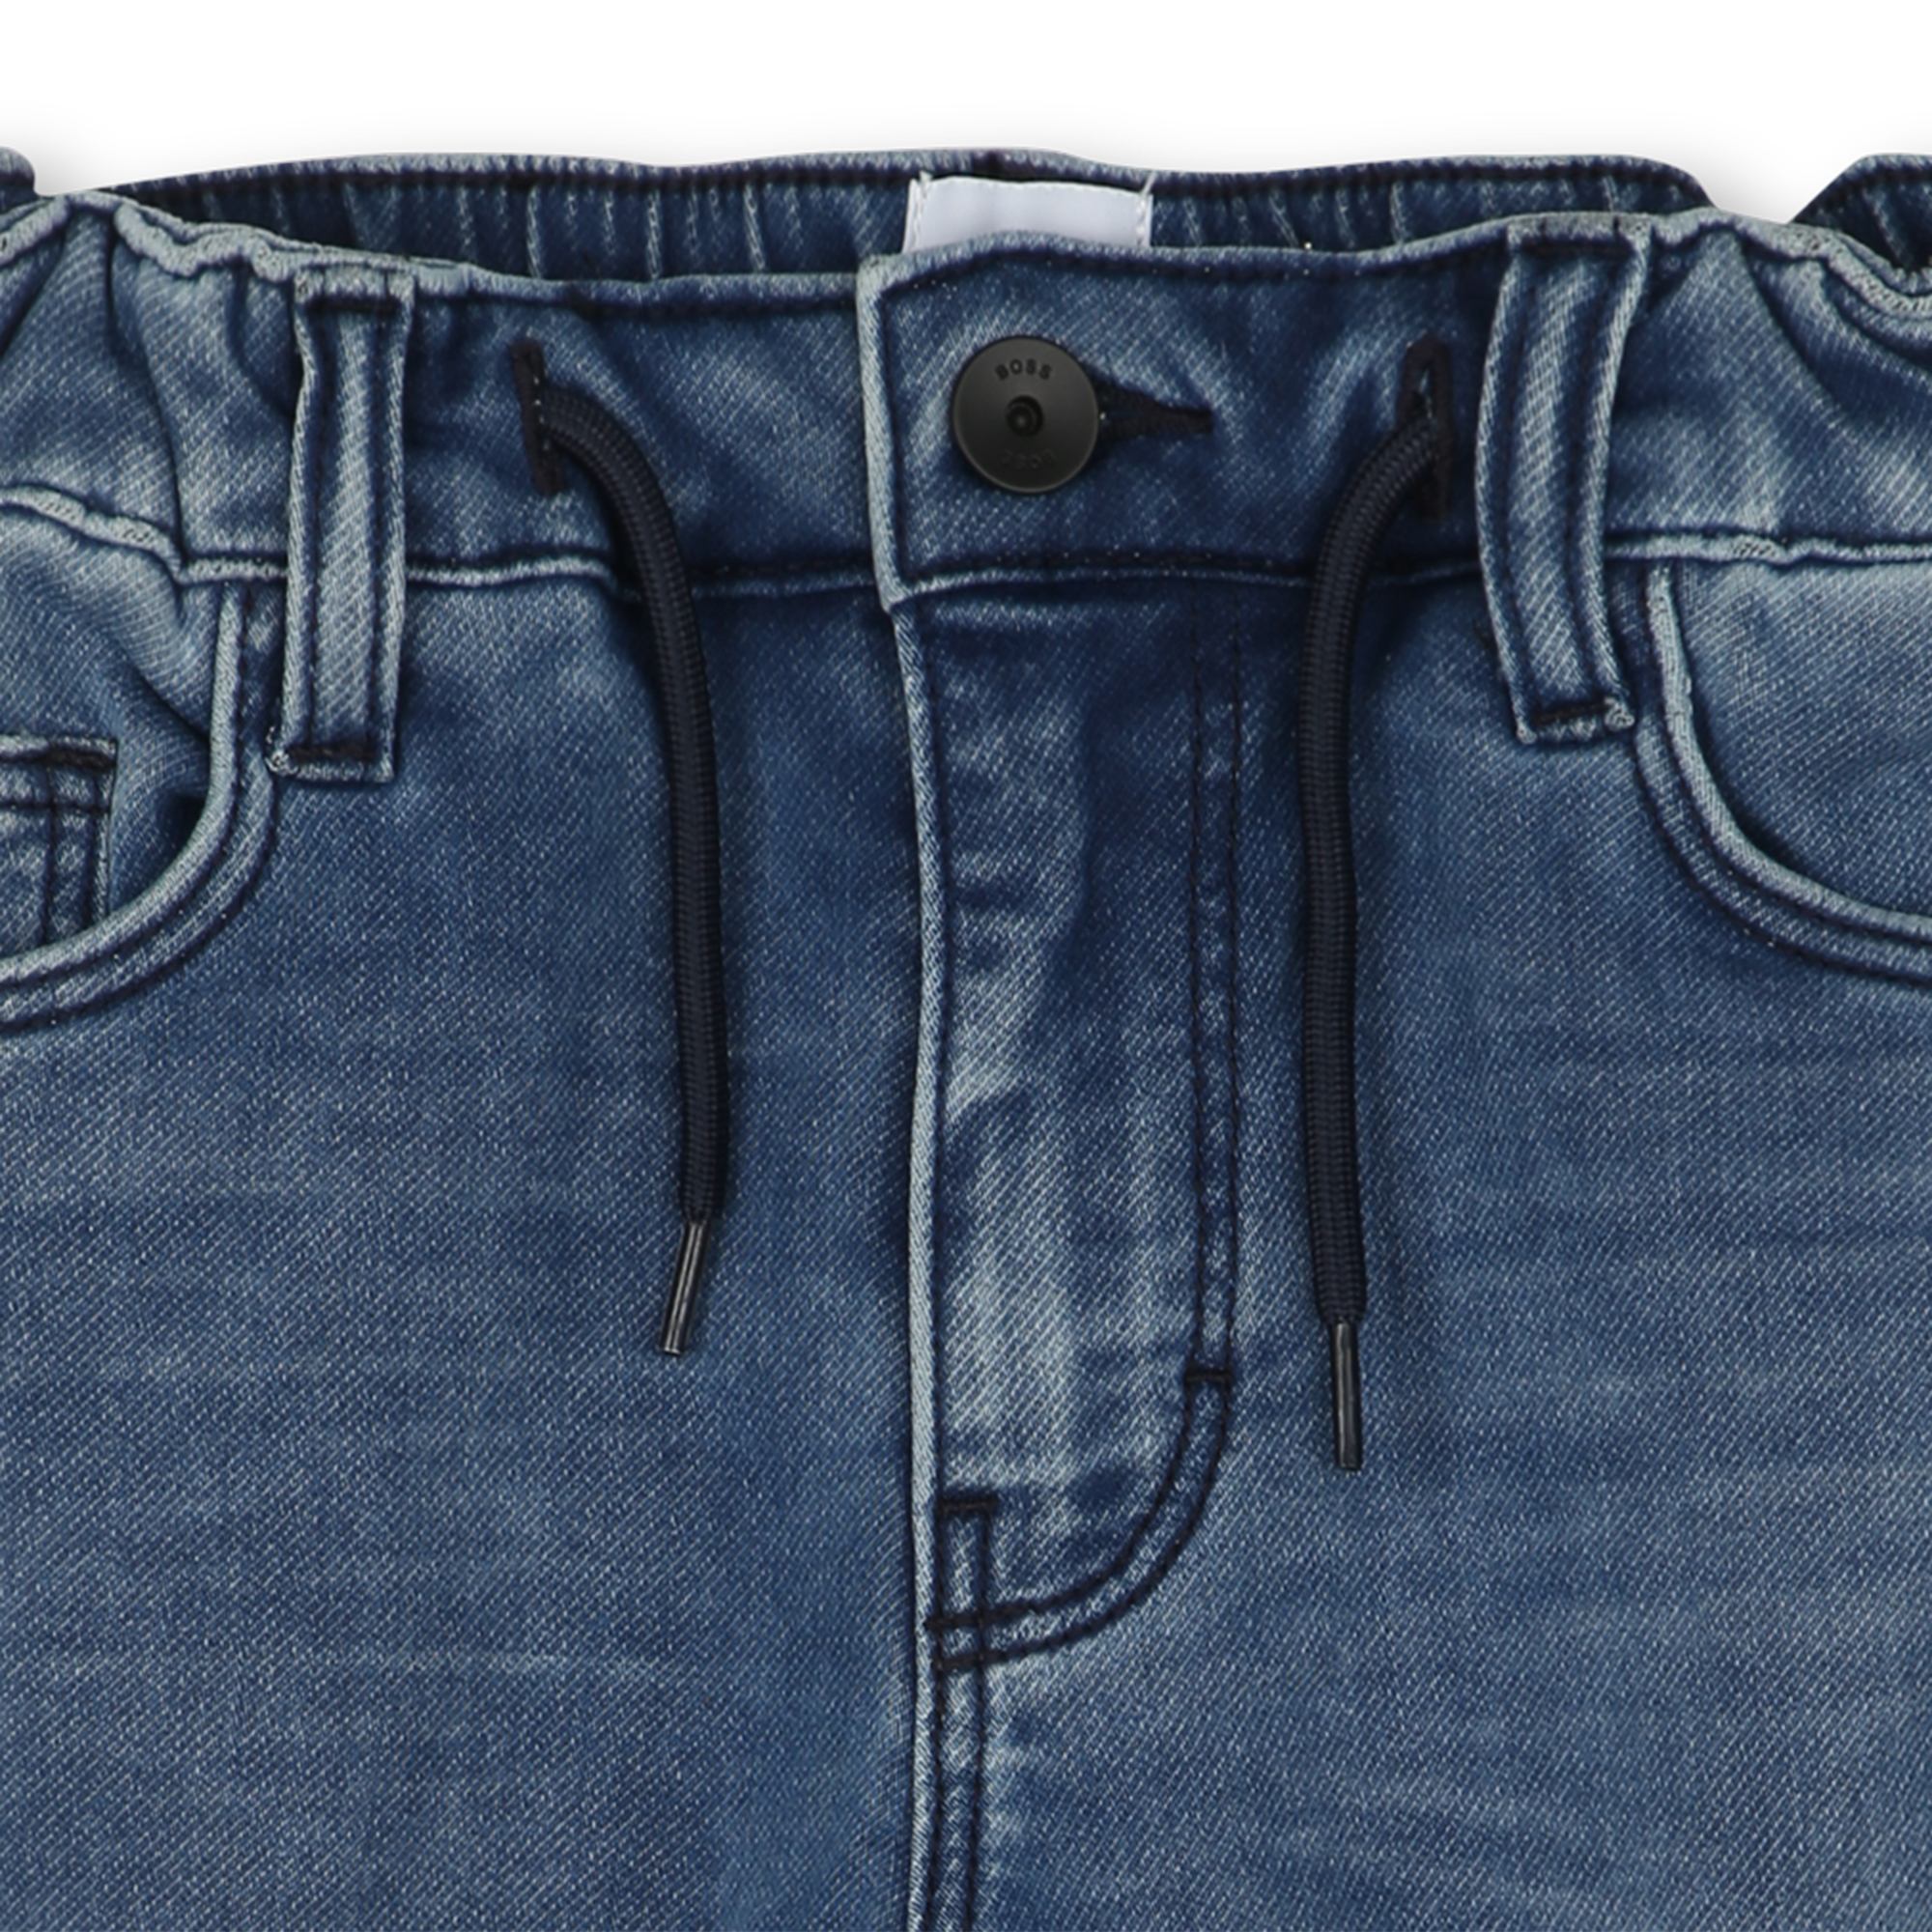 Shorts di jeans scoloriti BOSS Per RAGAZZO